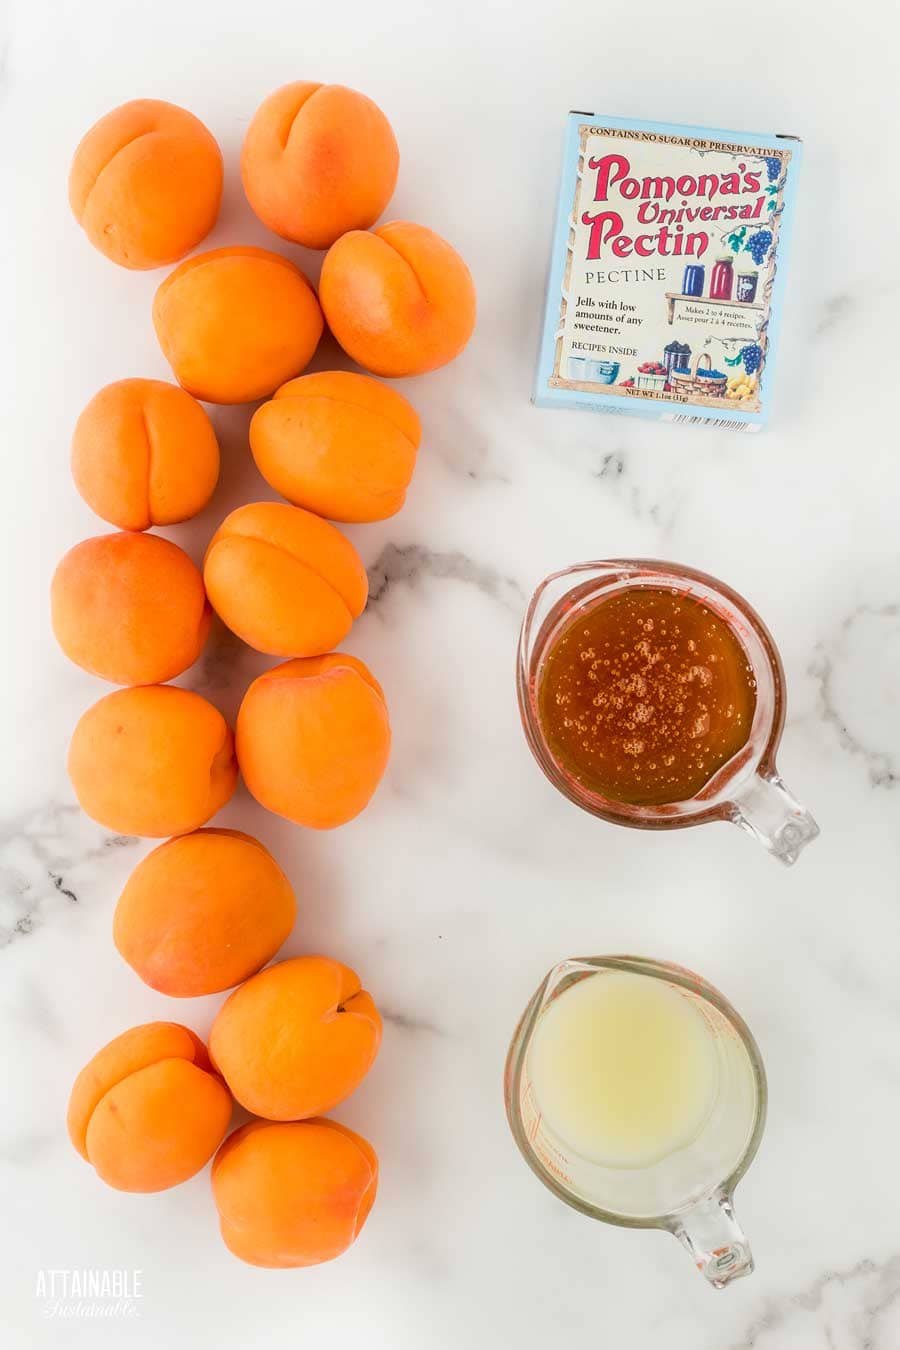 ingredients for apricot preserves: apricots, pomona pectin, honey, lemon juice.